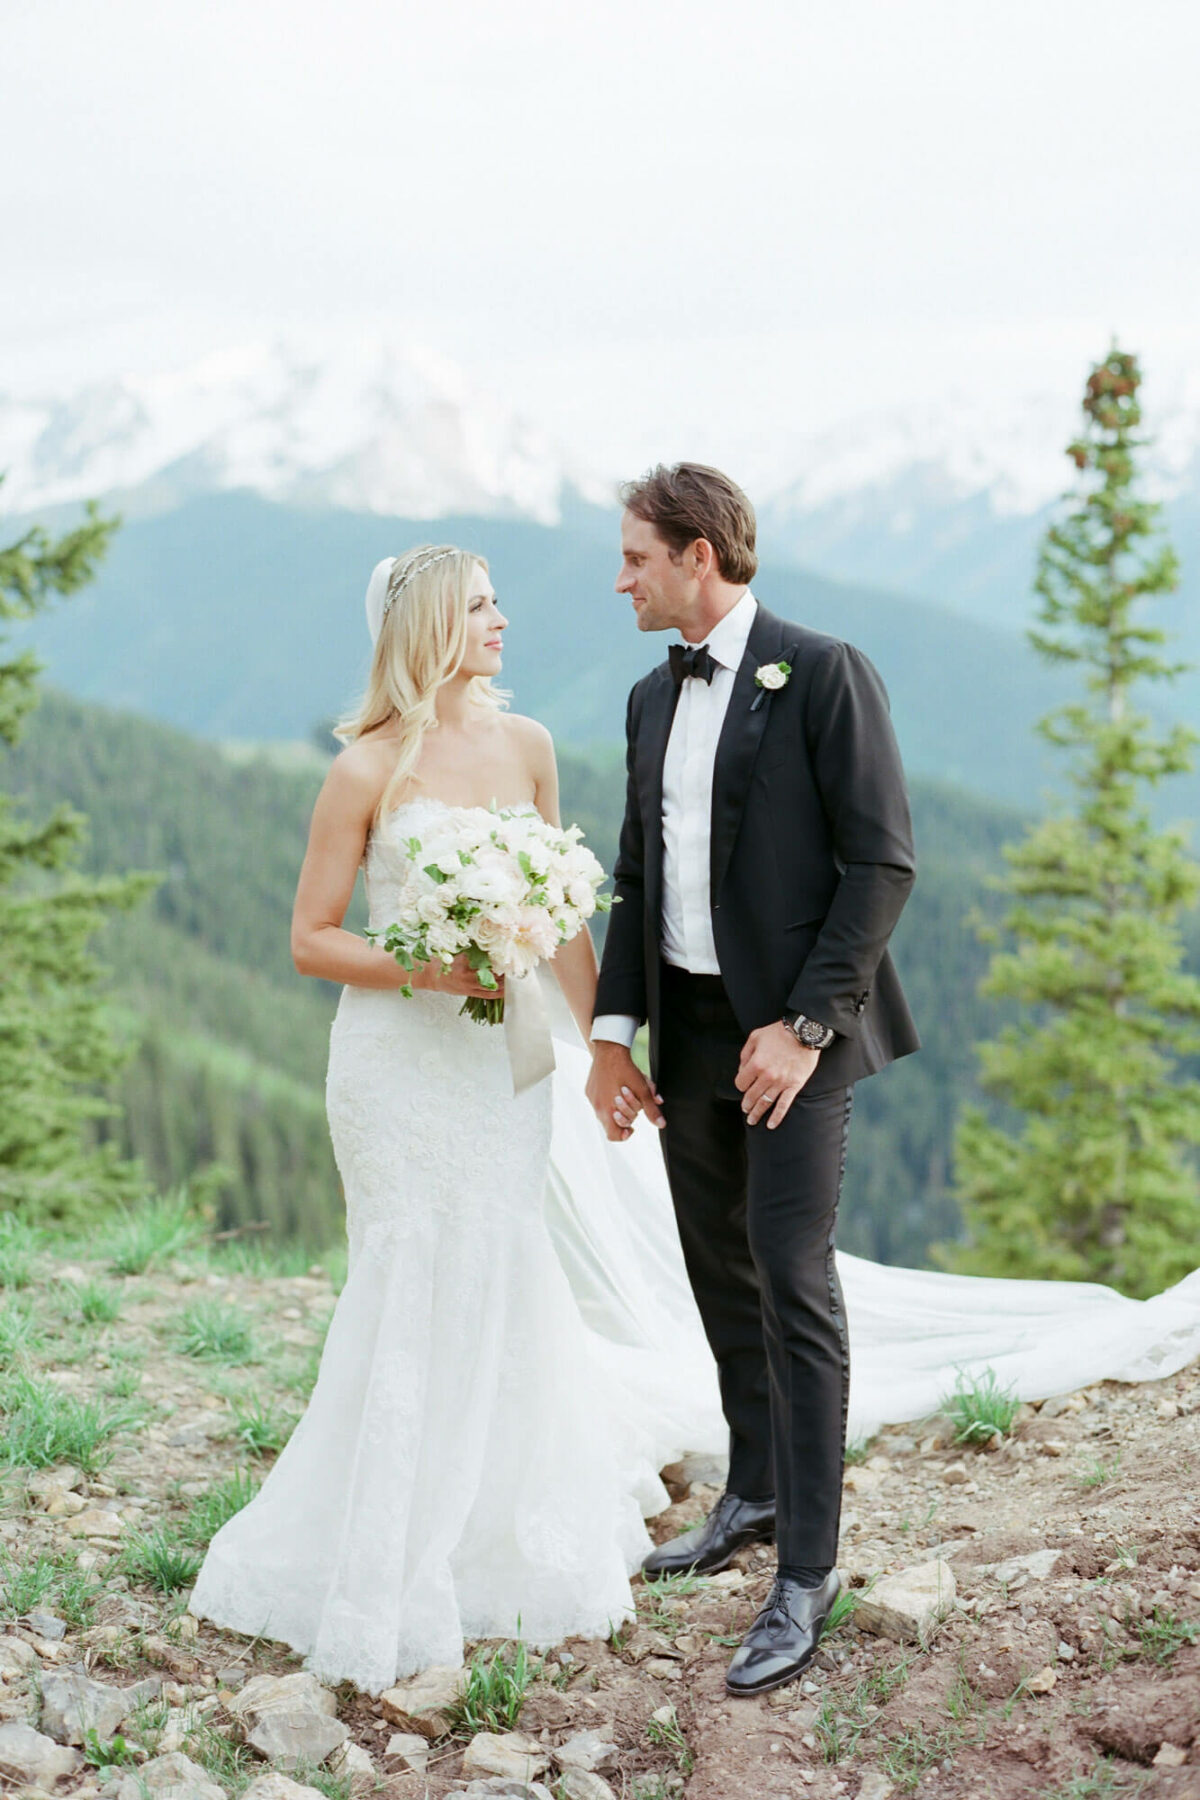 Aspen wedding film photography - bride and groom